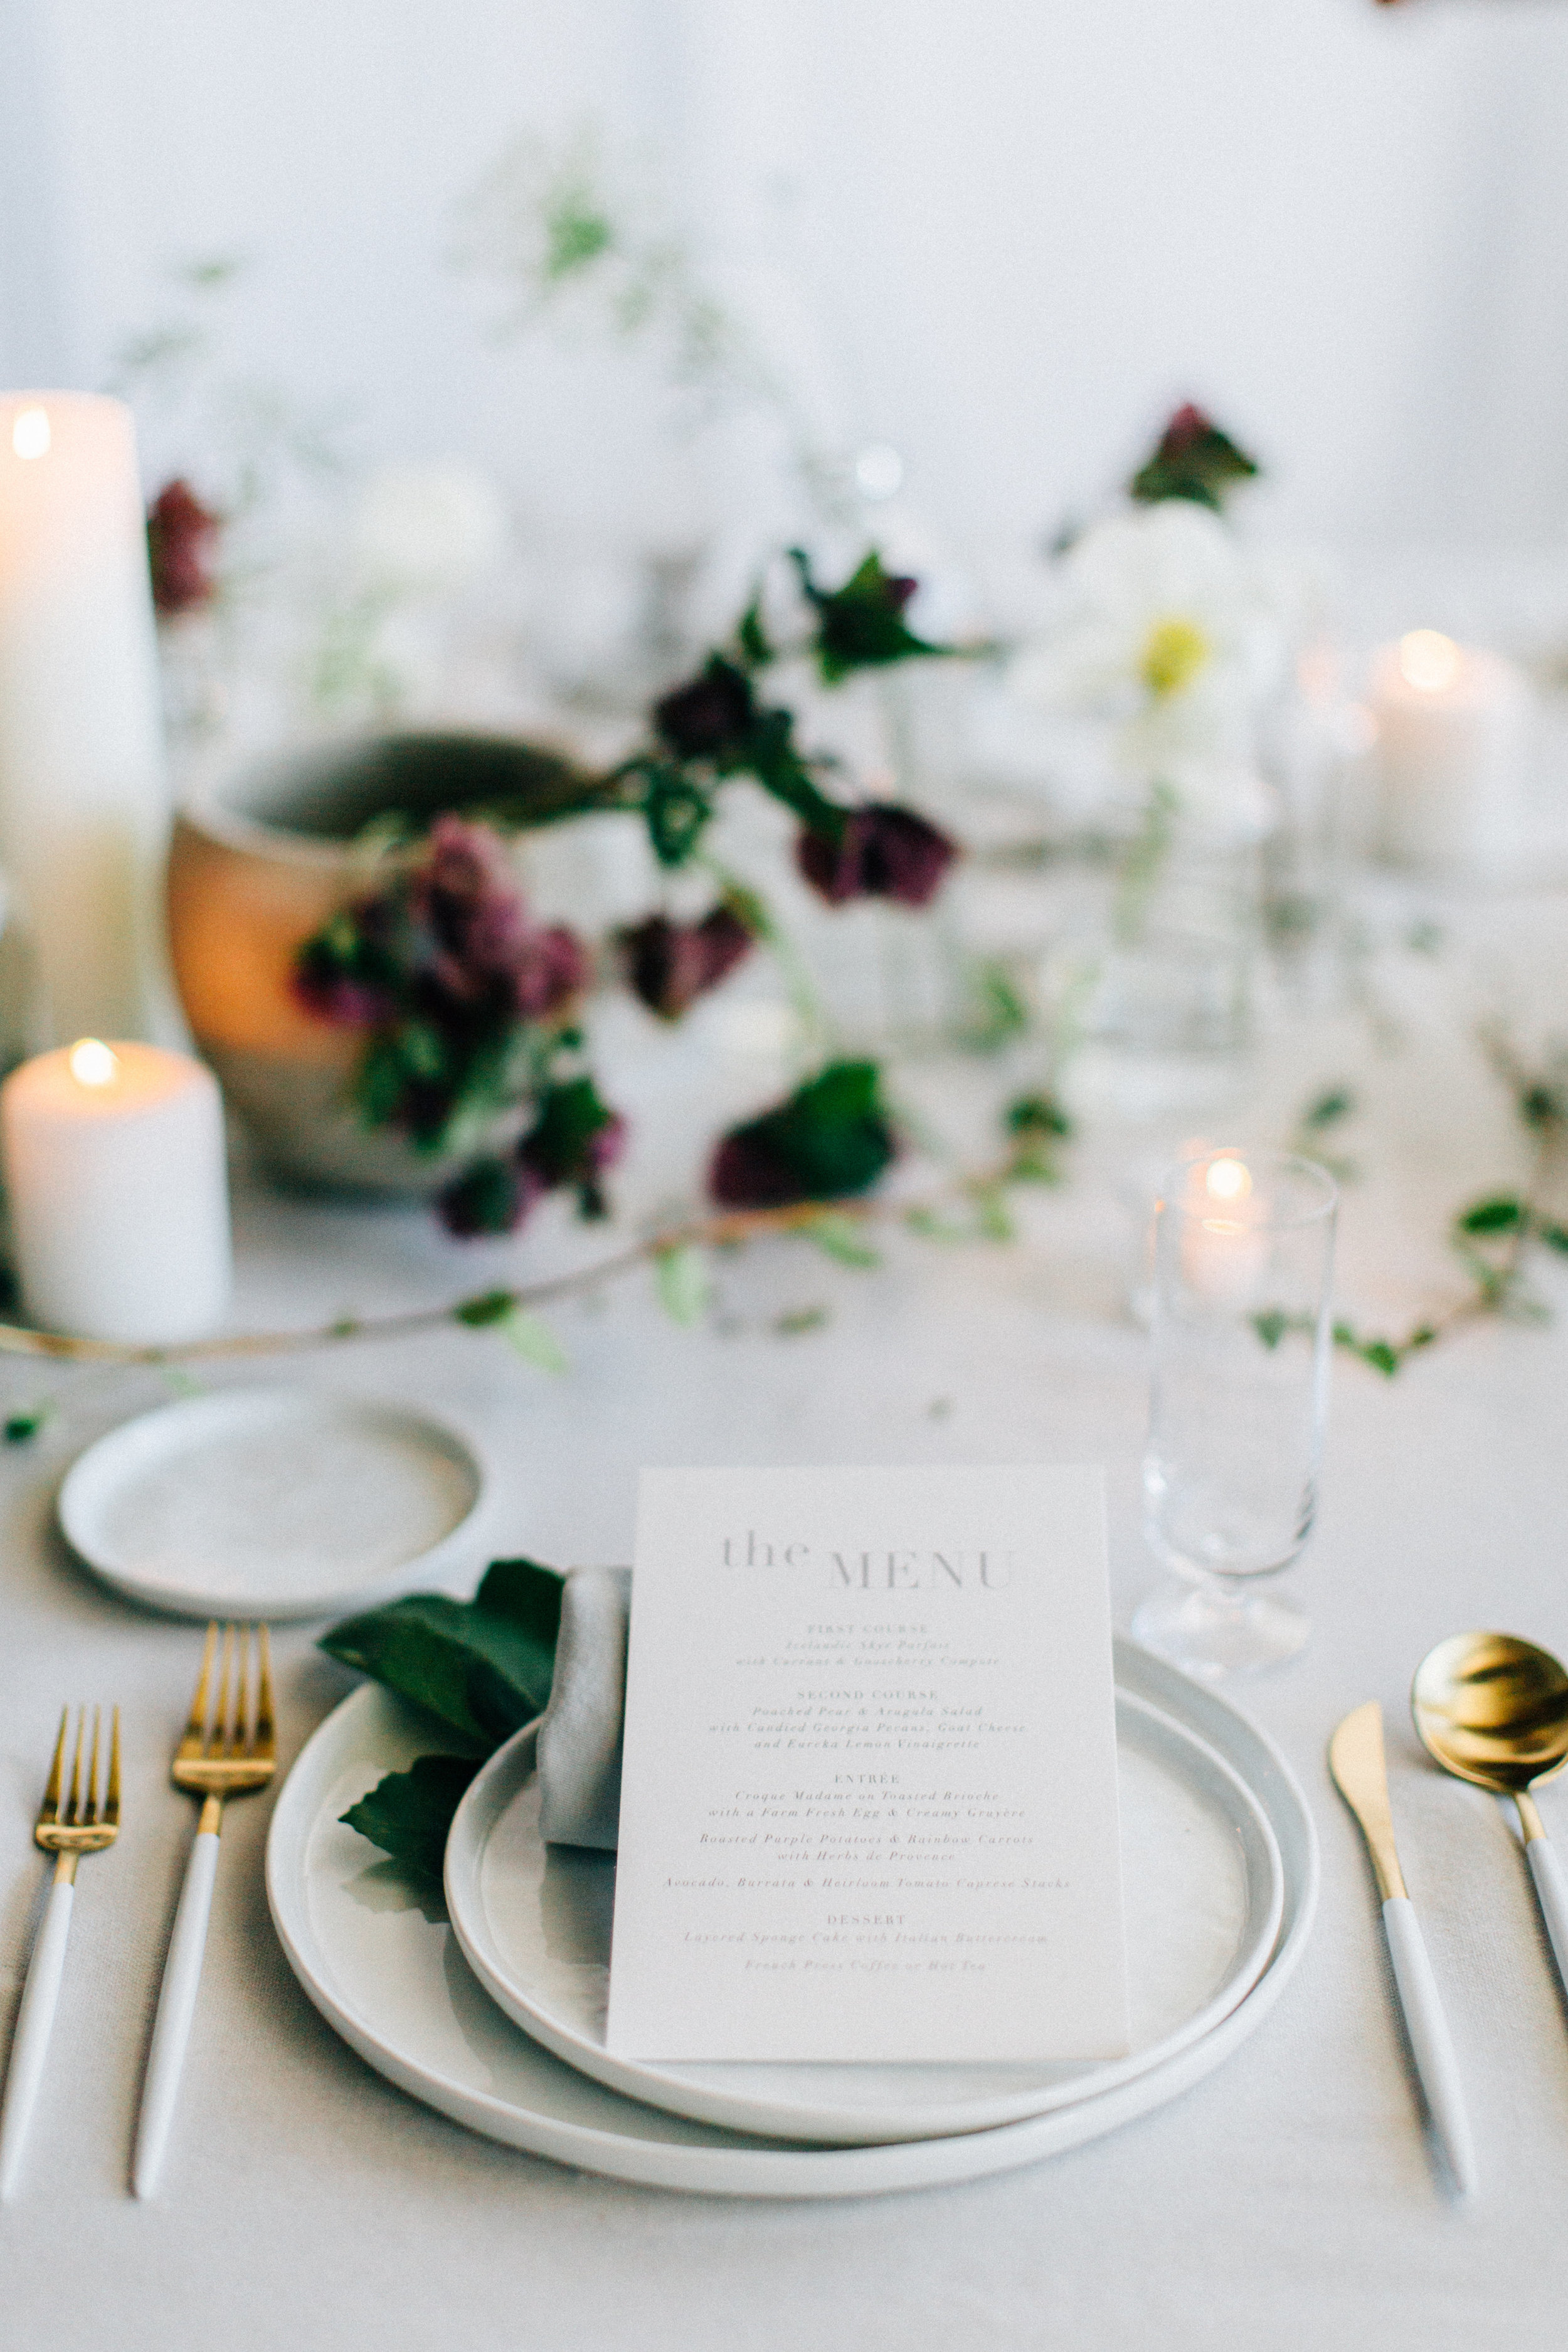 Modern and Minimal Indoor Wedding Reception Place Settings | Simply Charming Socials | Atlanta Wedding Planner